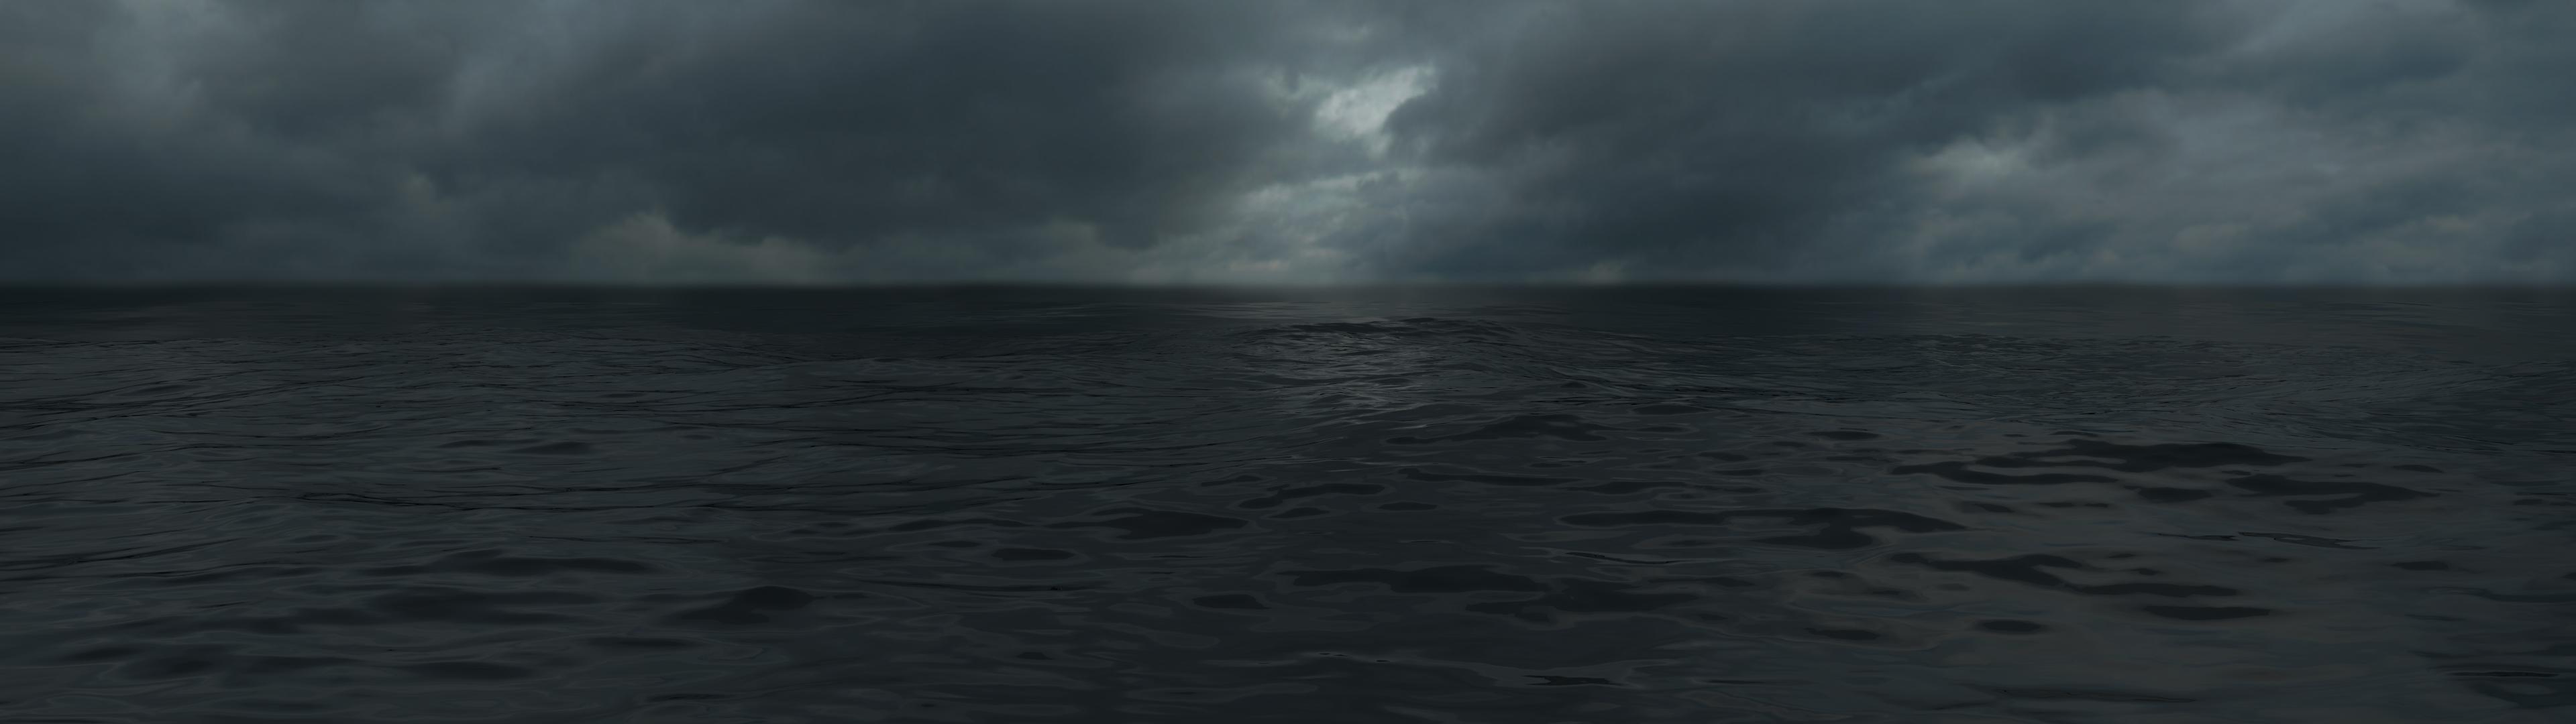 Dark clouds over sea [3840x1080] two 1080 monitors iimgurcom